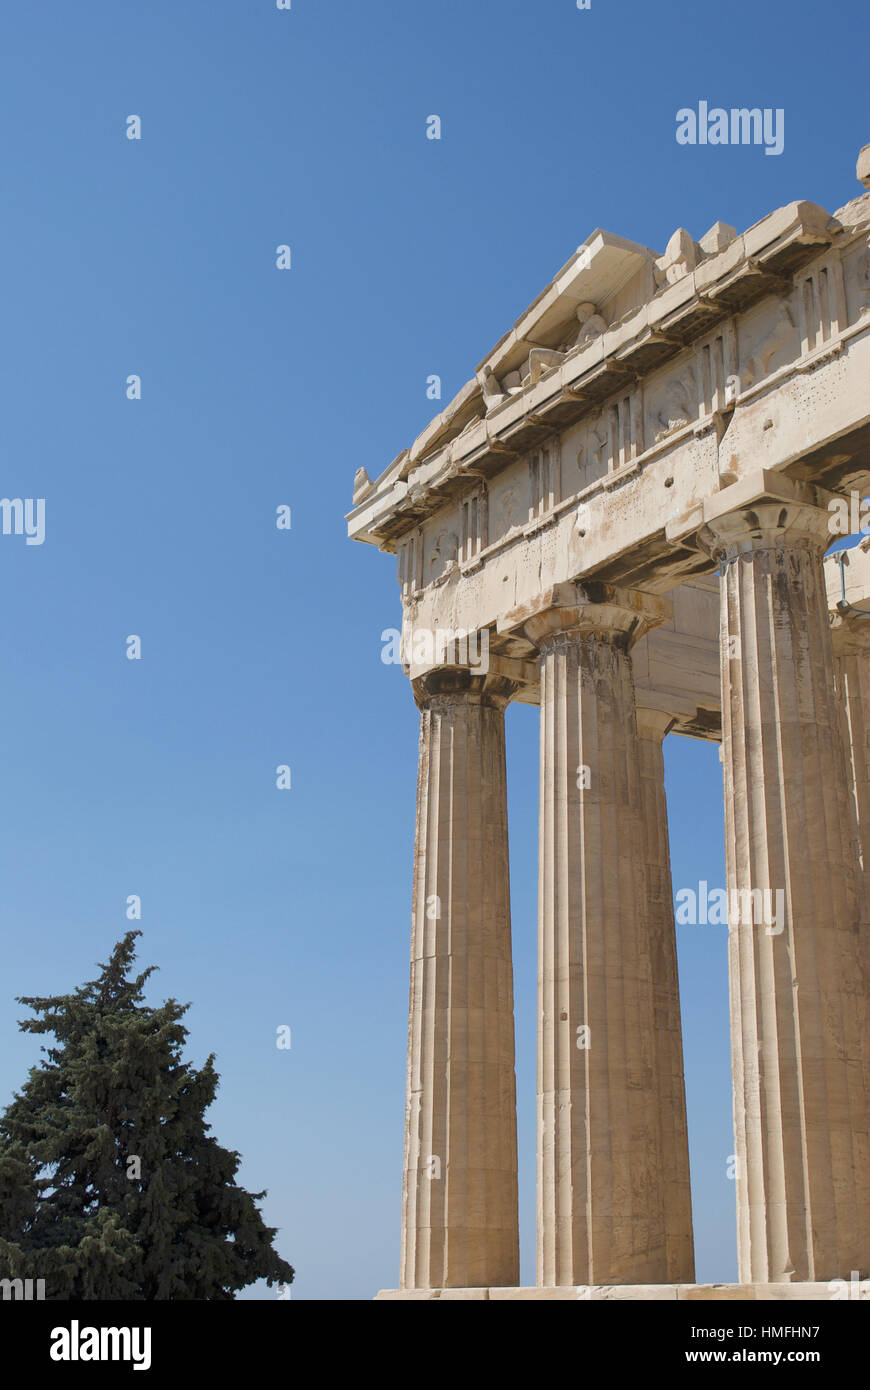 The pillars of the Parthenon in Athens, Greece. Stock Photo